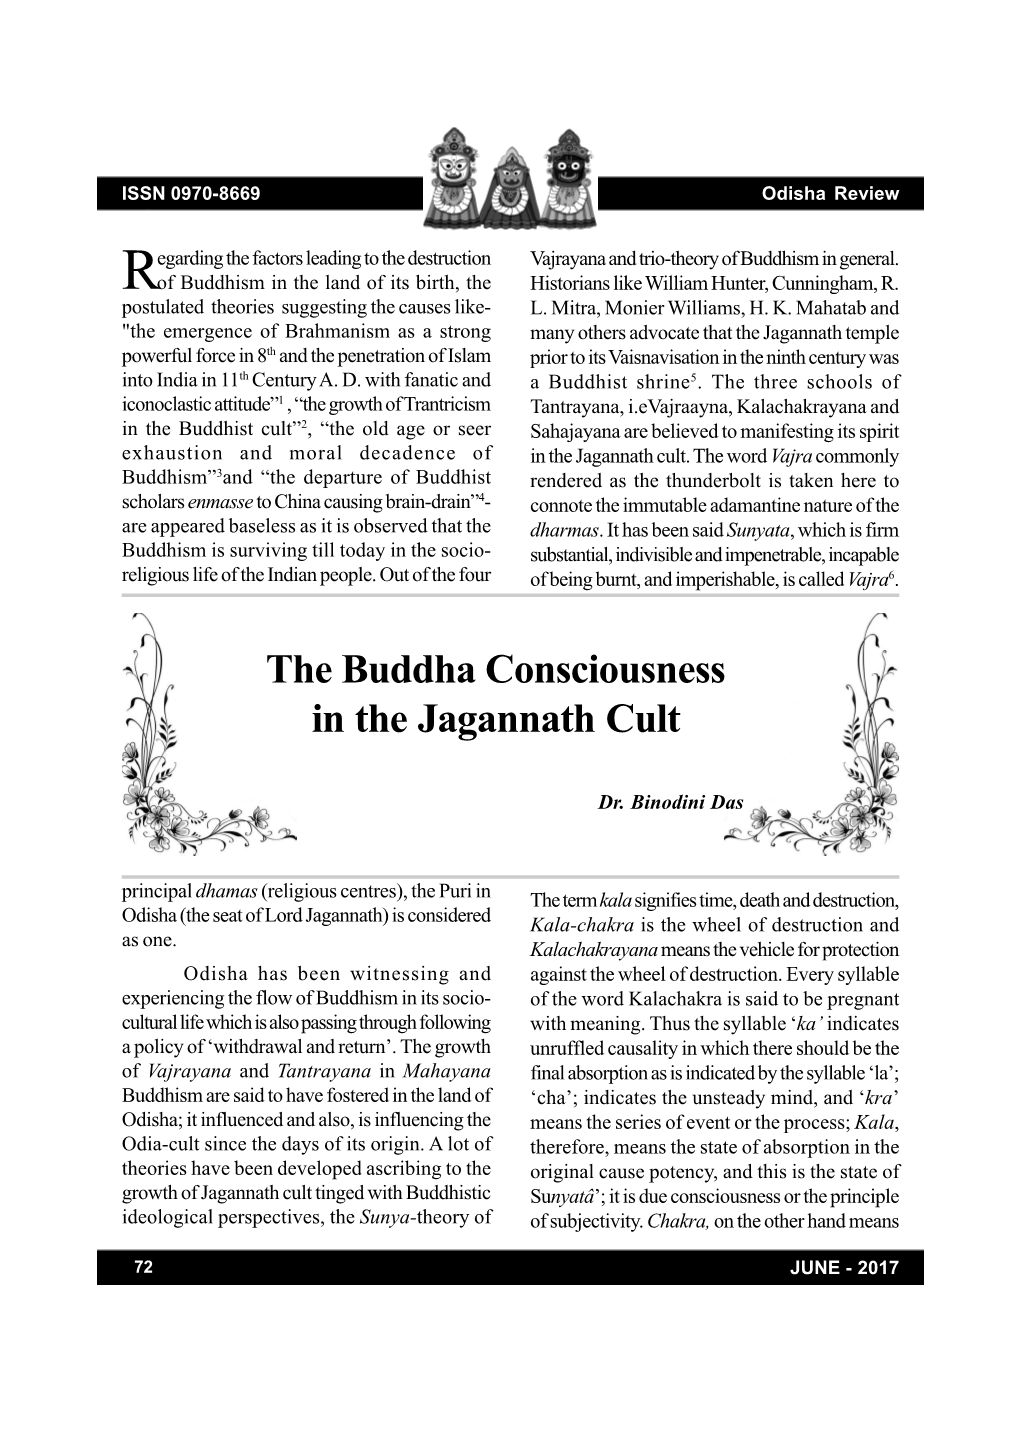 The Buddha Consciousness in the Jagannath Cult